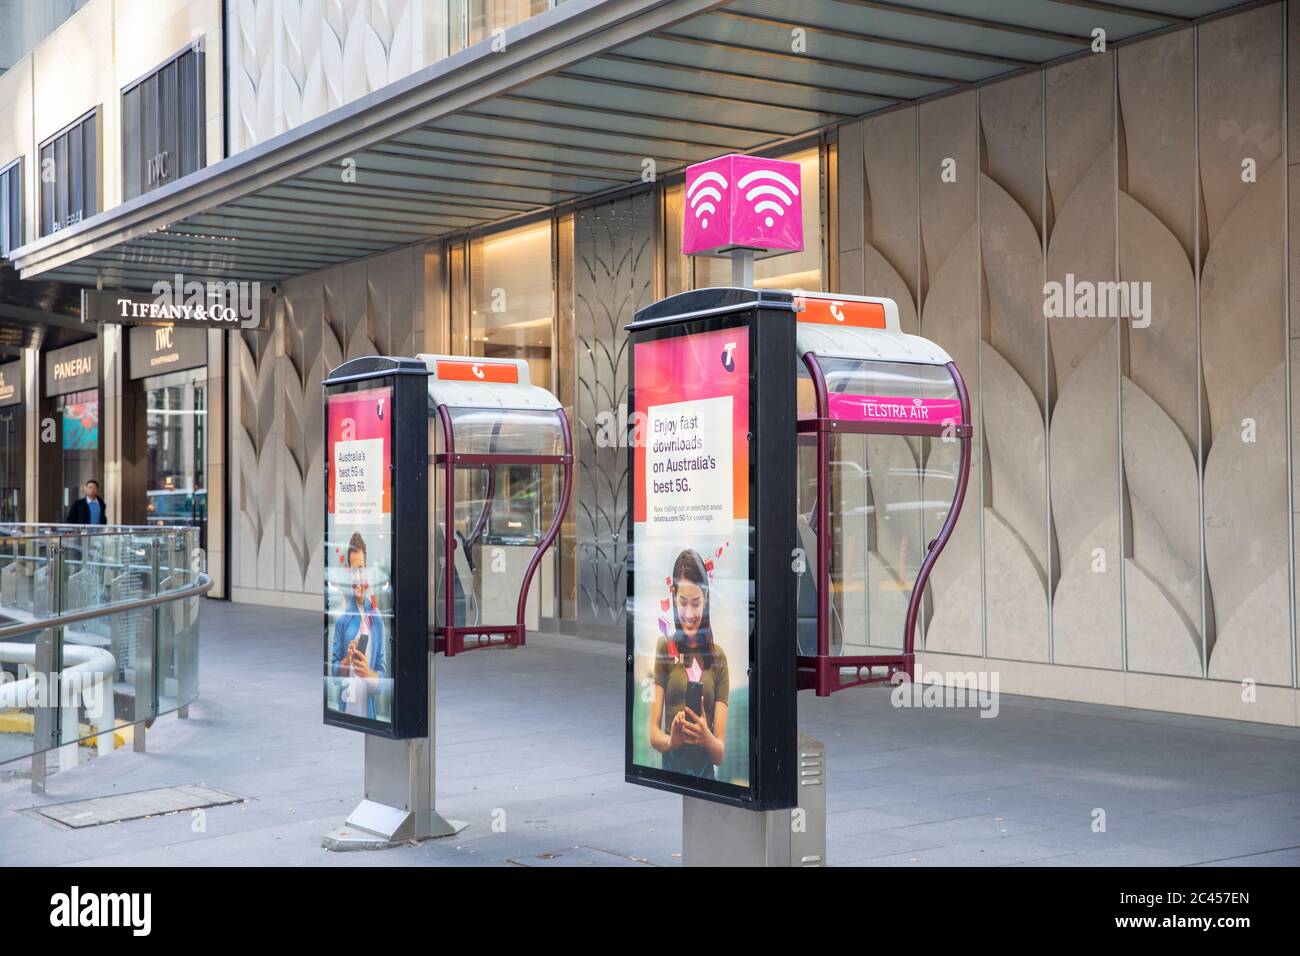 Telstra public payphone in Sydney city centre Australia Stock Photo